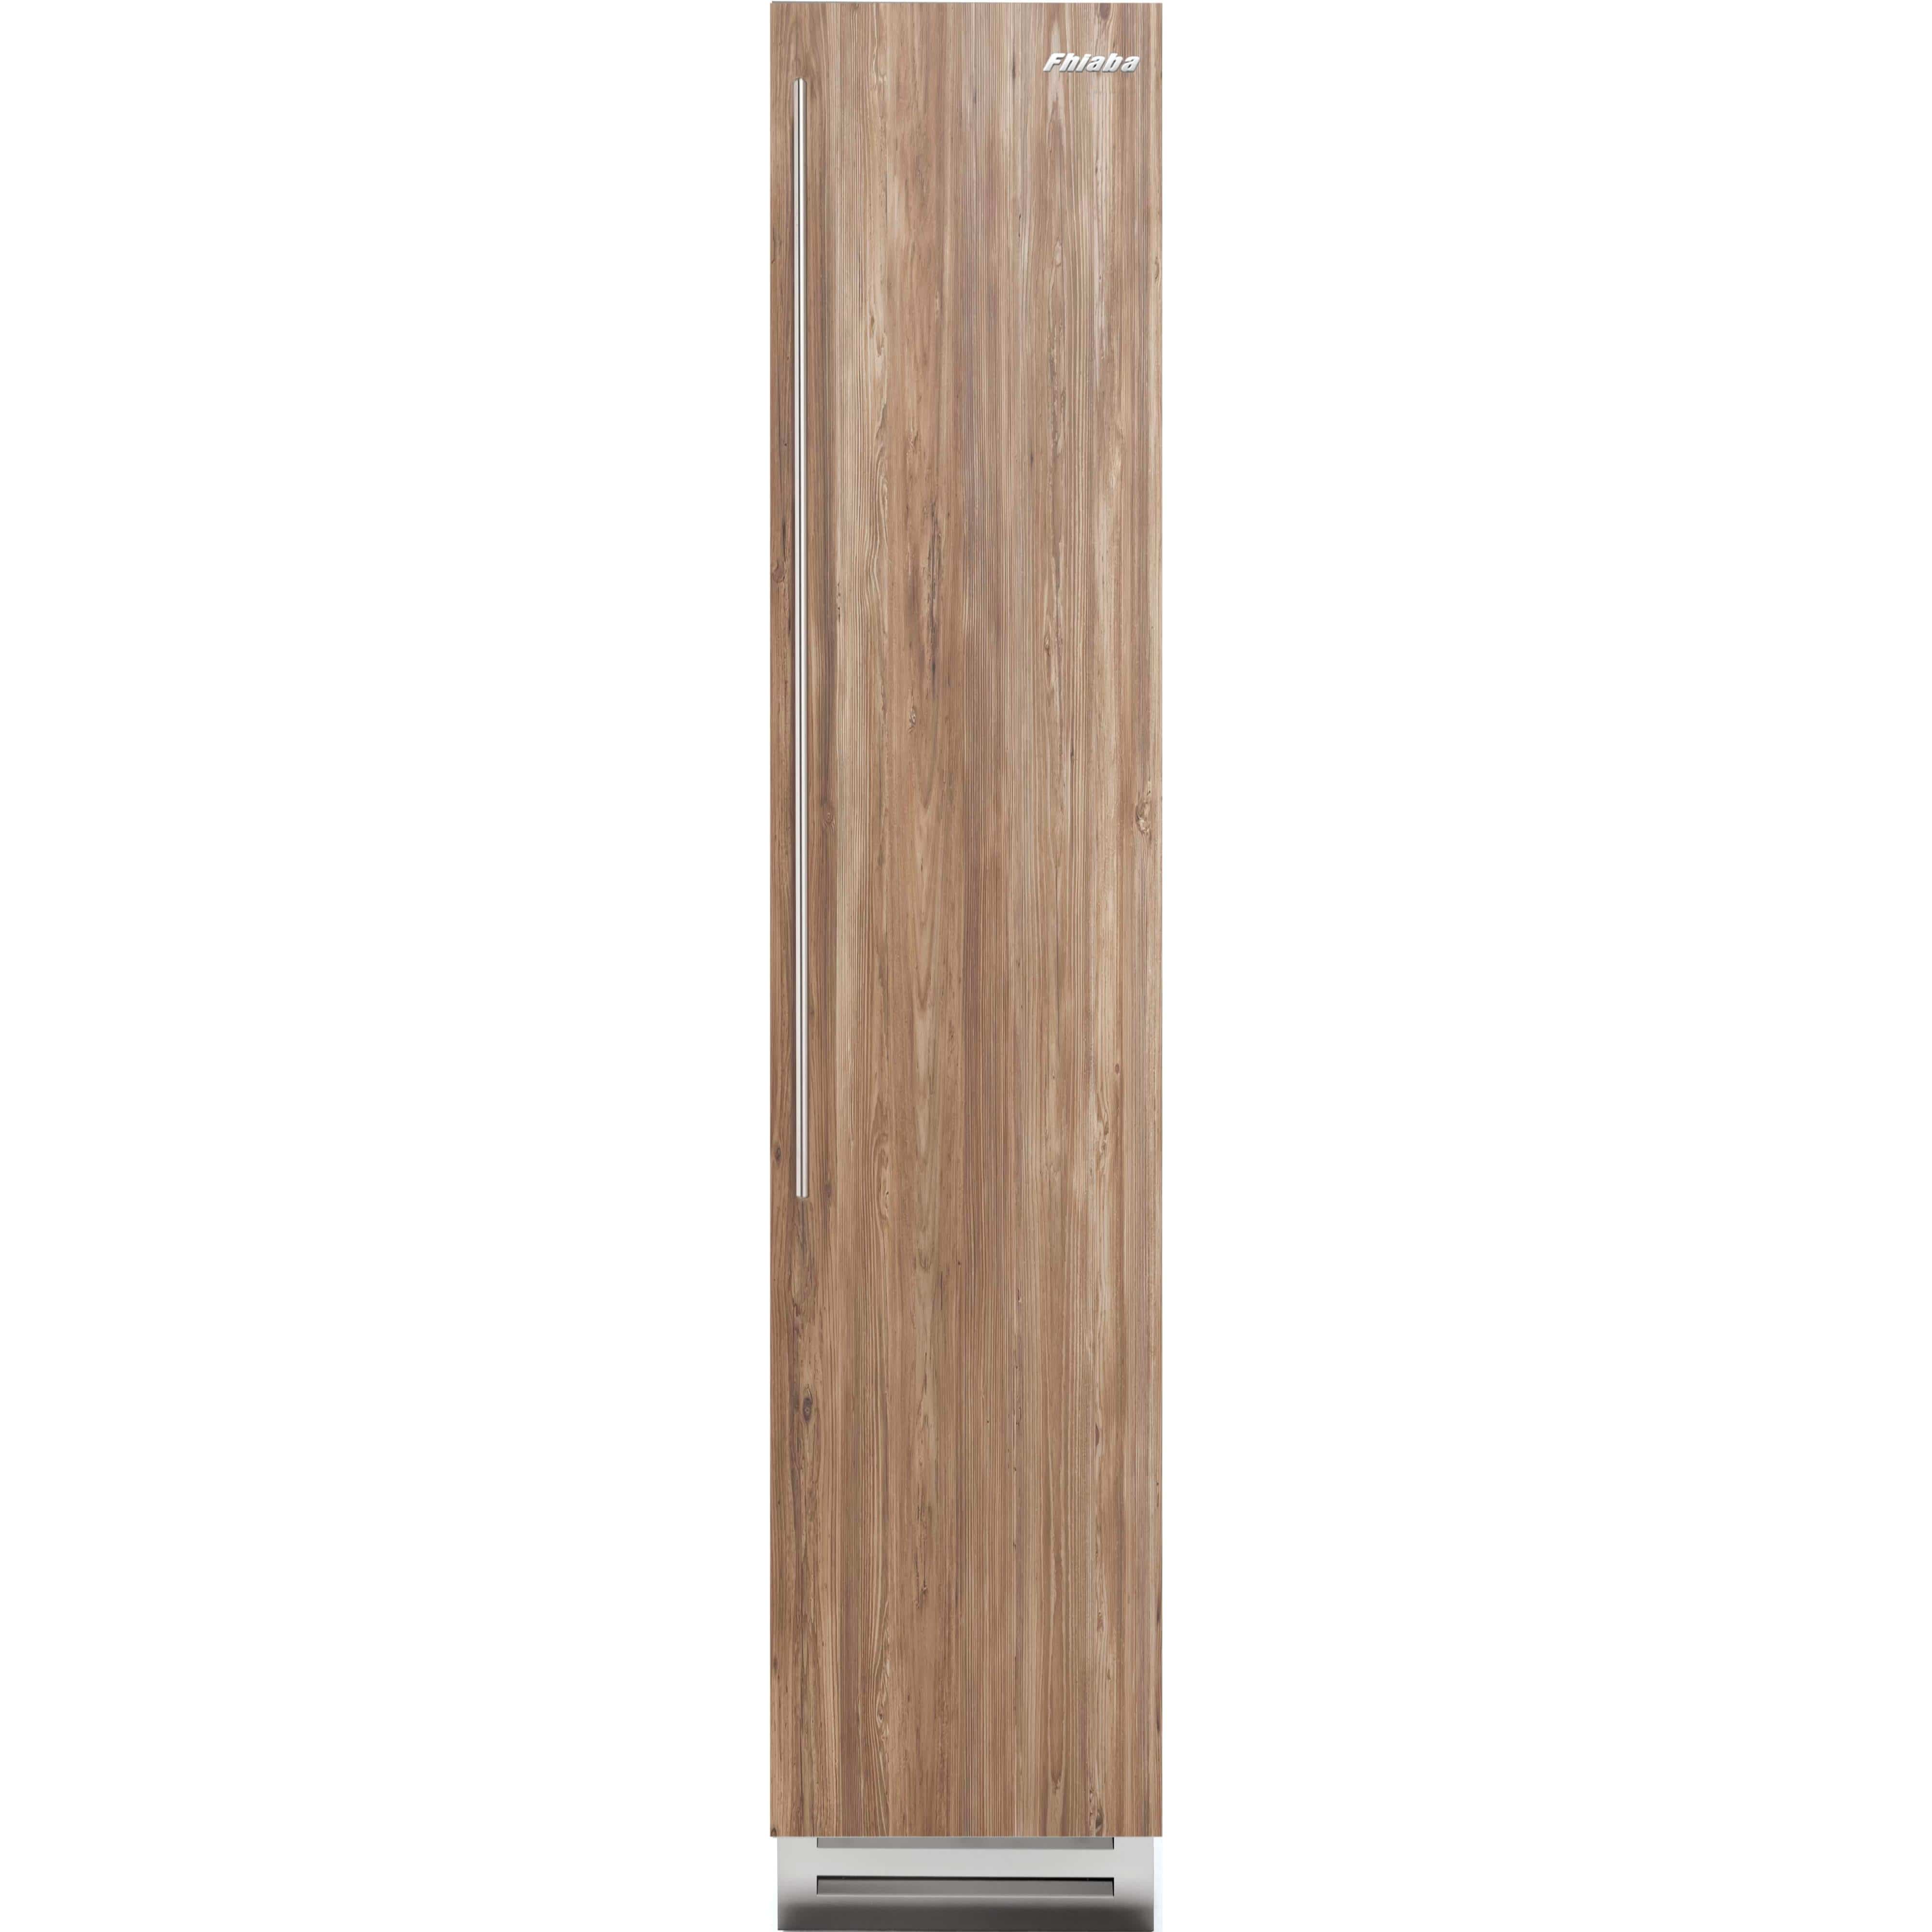 Fhiaba 8.22 cu. ft. Upright Freezer with Smart Touch TFT Display FI18FZC-RO2 Freezers FI18FZCRO2 Luxury Appliances Direct